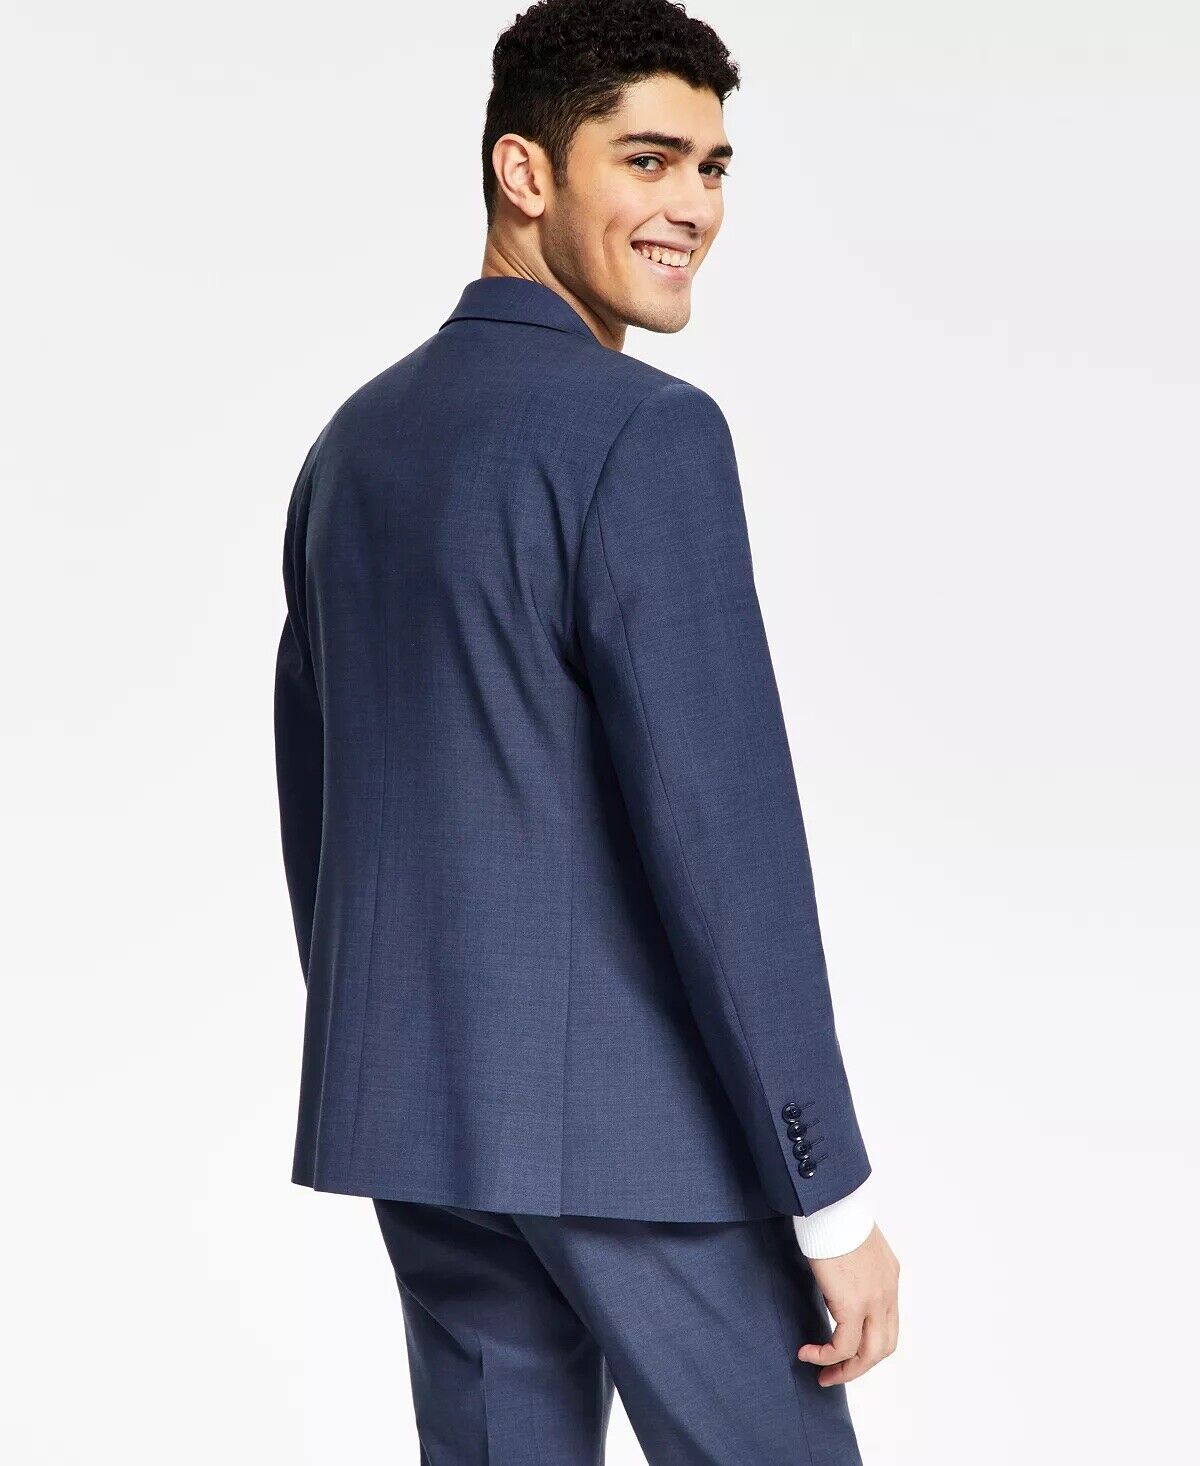 Bar Iii Men's Slim-Fit Solid Suit Jacket Blue 42R